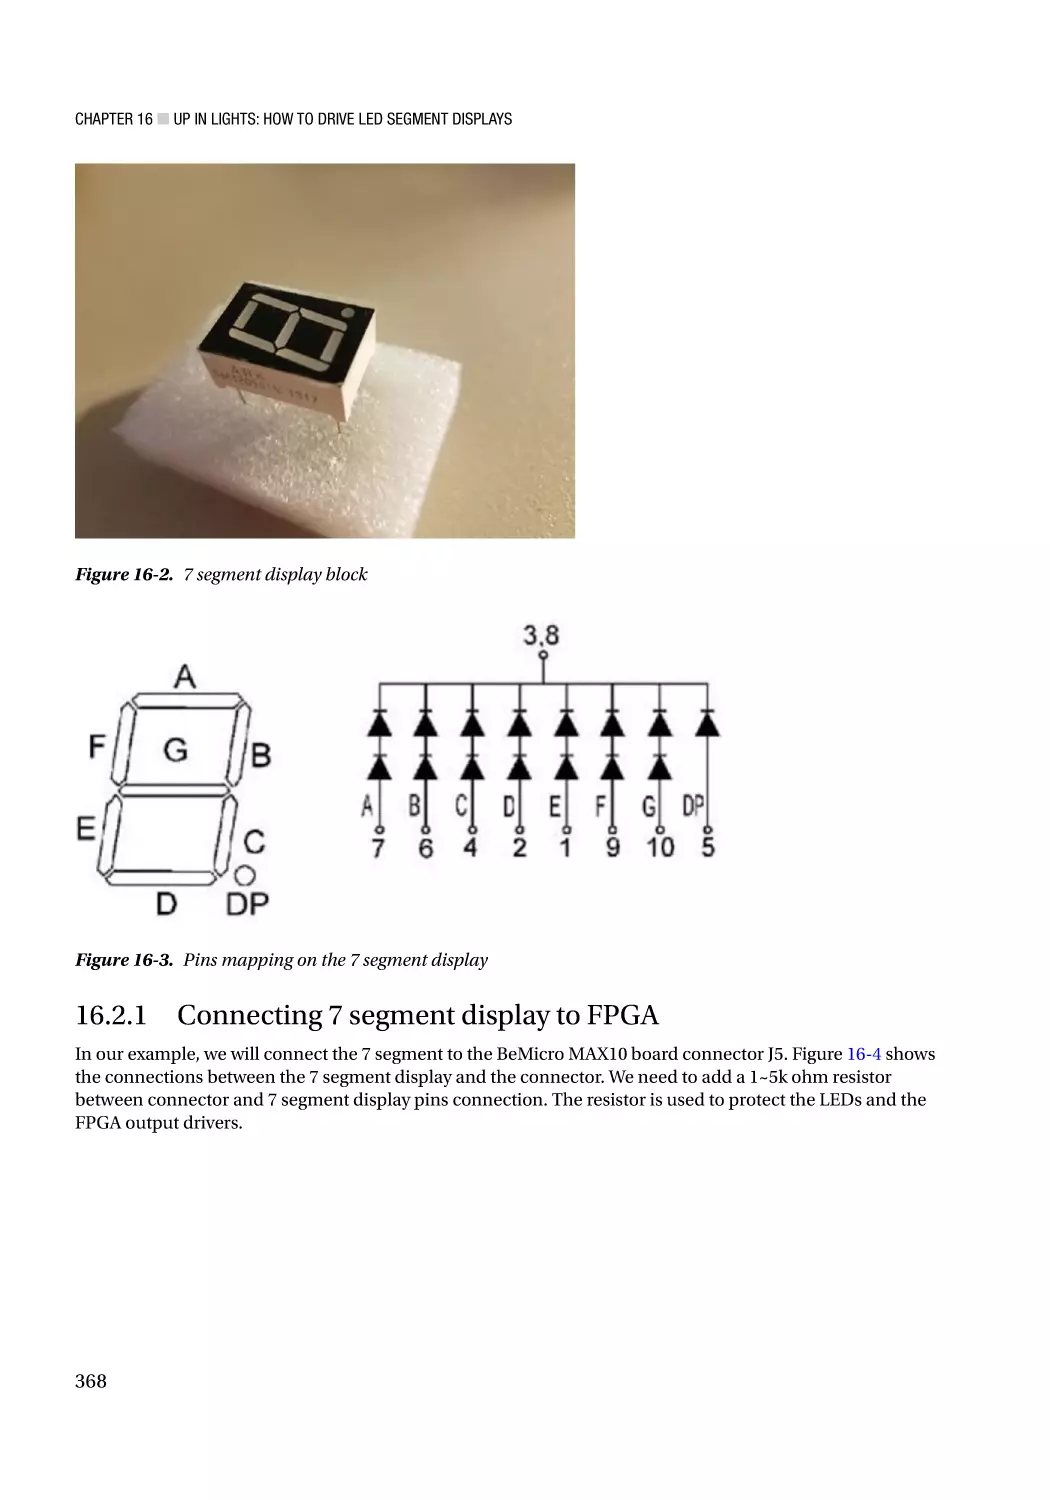 16.2.1 Connecting 7 segment display to FPGA